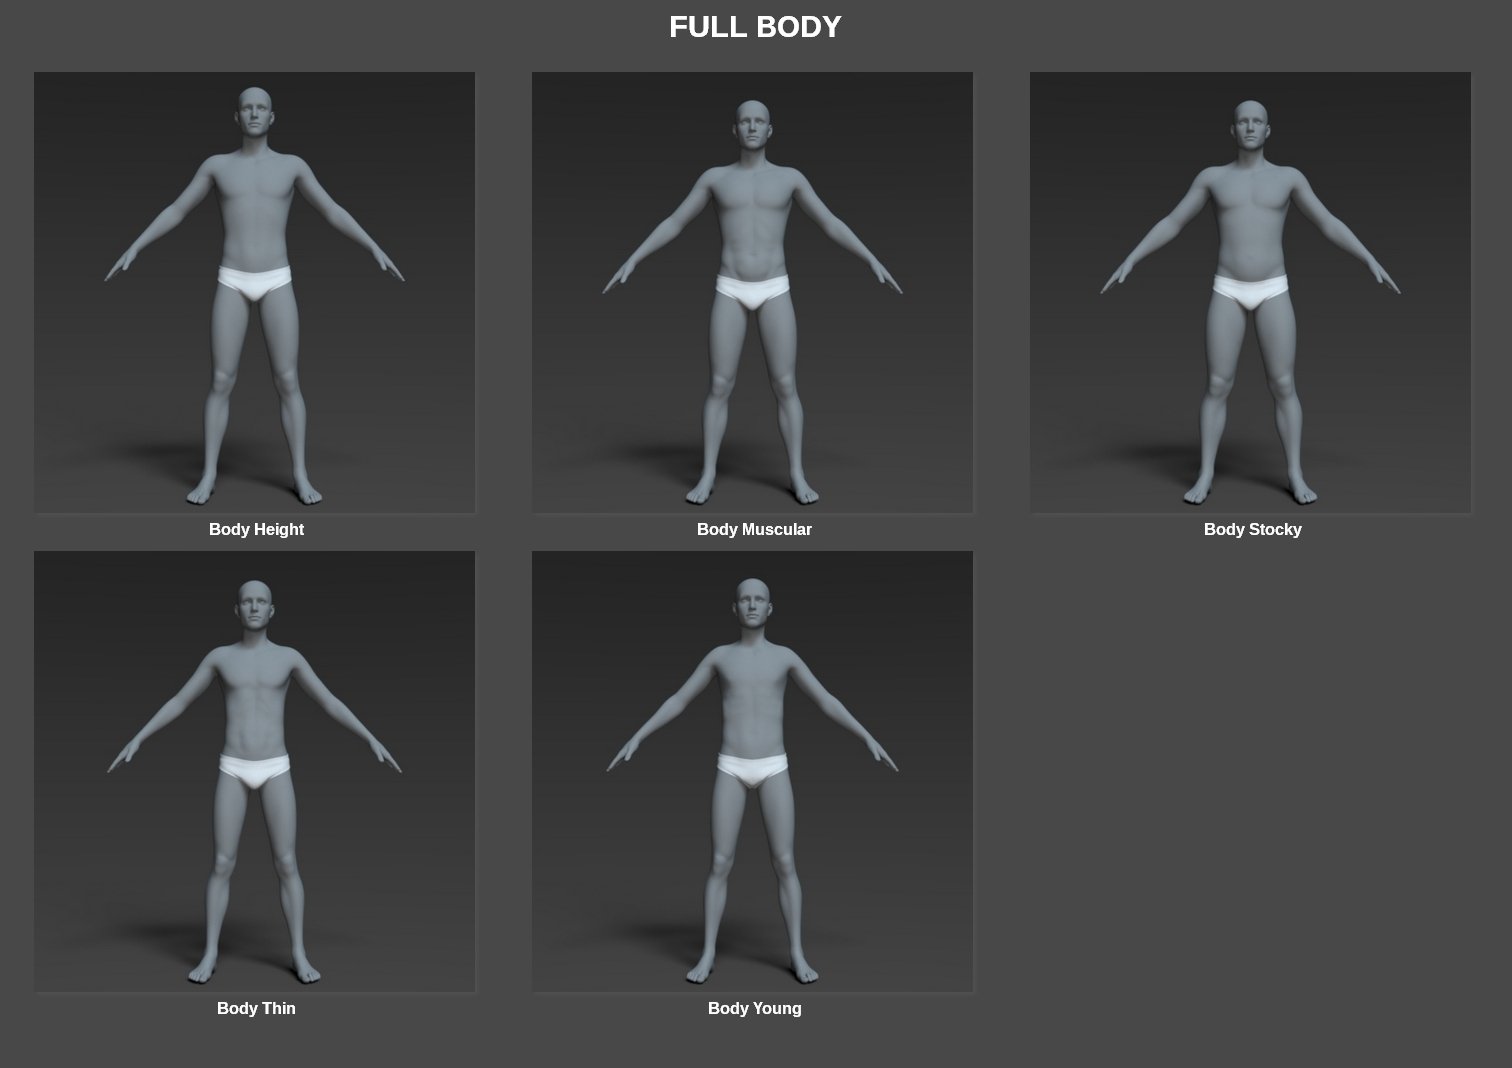 Body Morph Kit for Genesis 8 Male by: SF-Design, 3D Models by Daz 3D